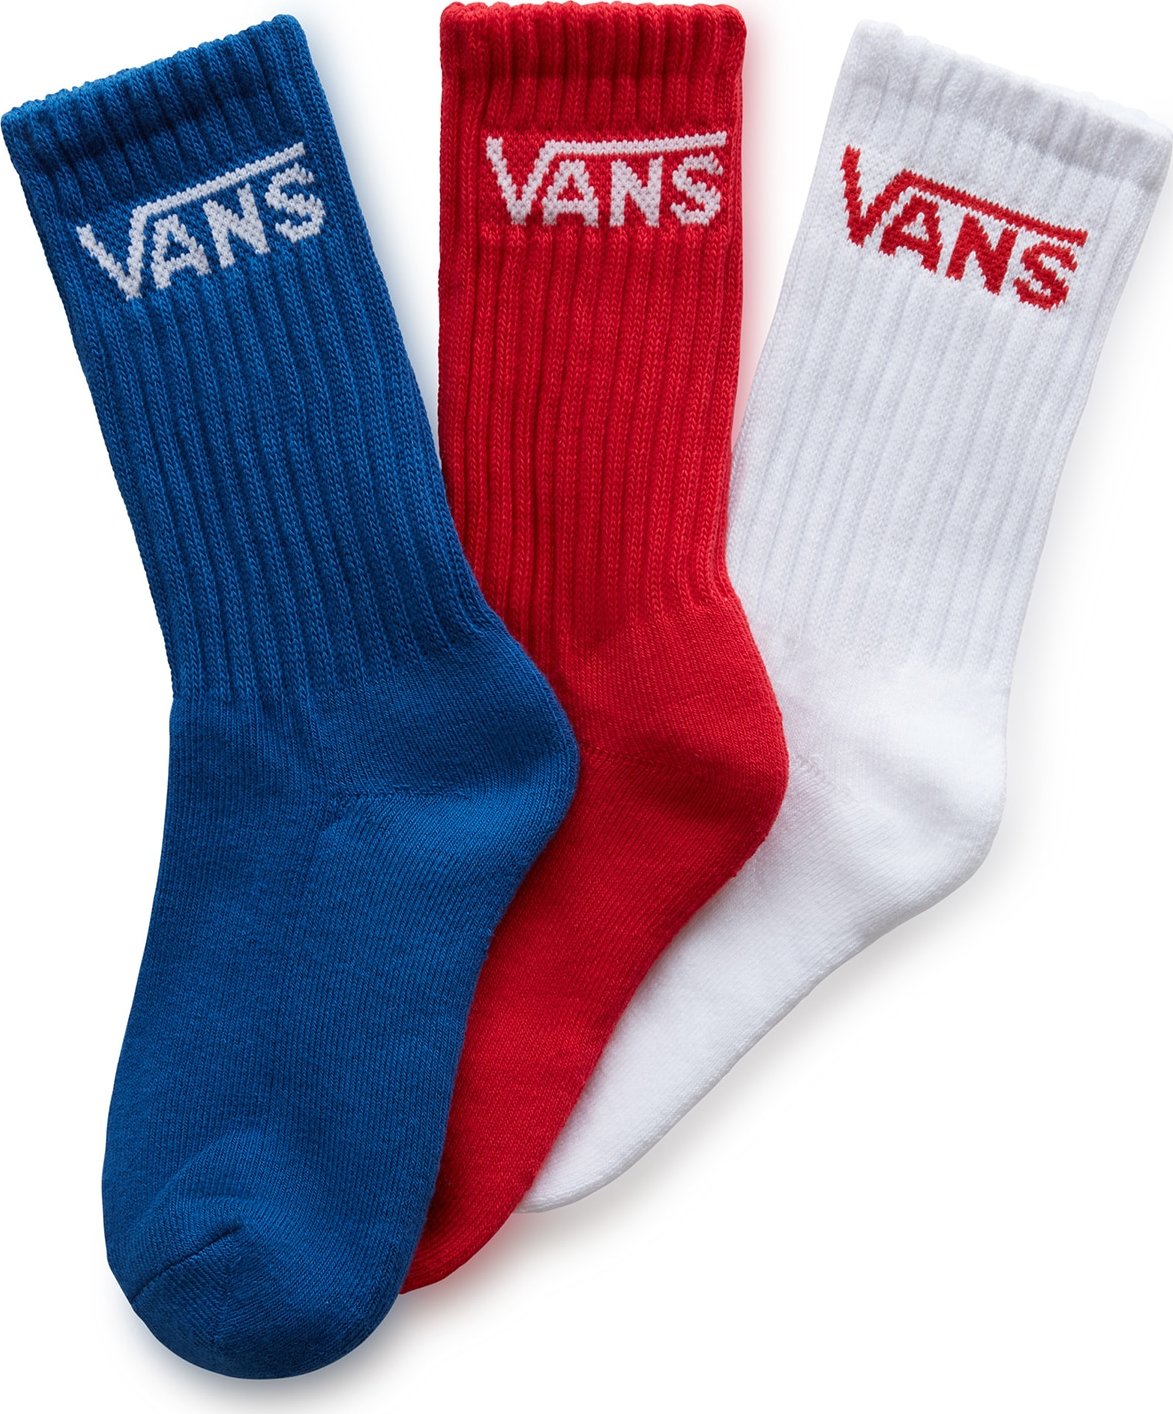 VANS Ponožky modrá / červená / bílá